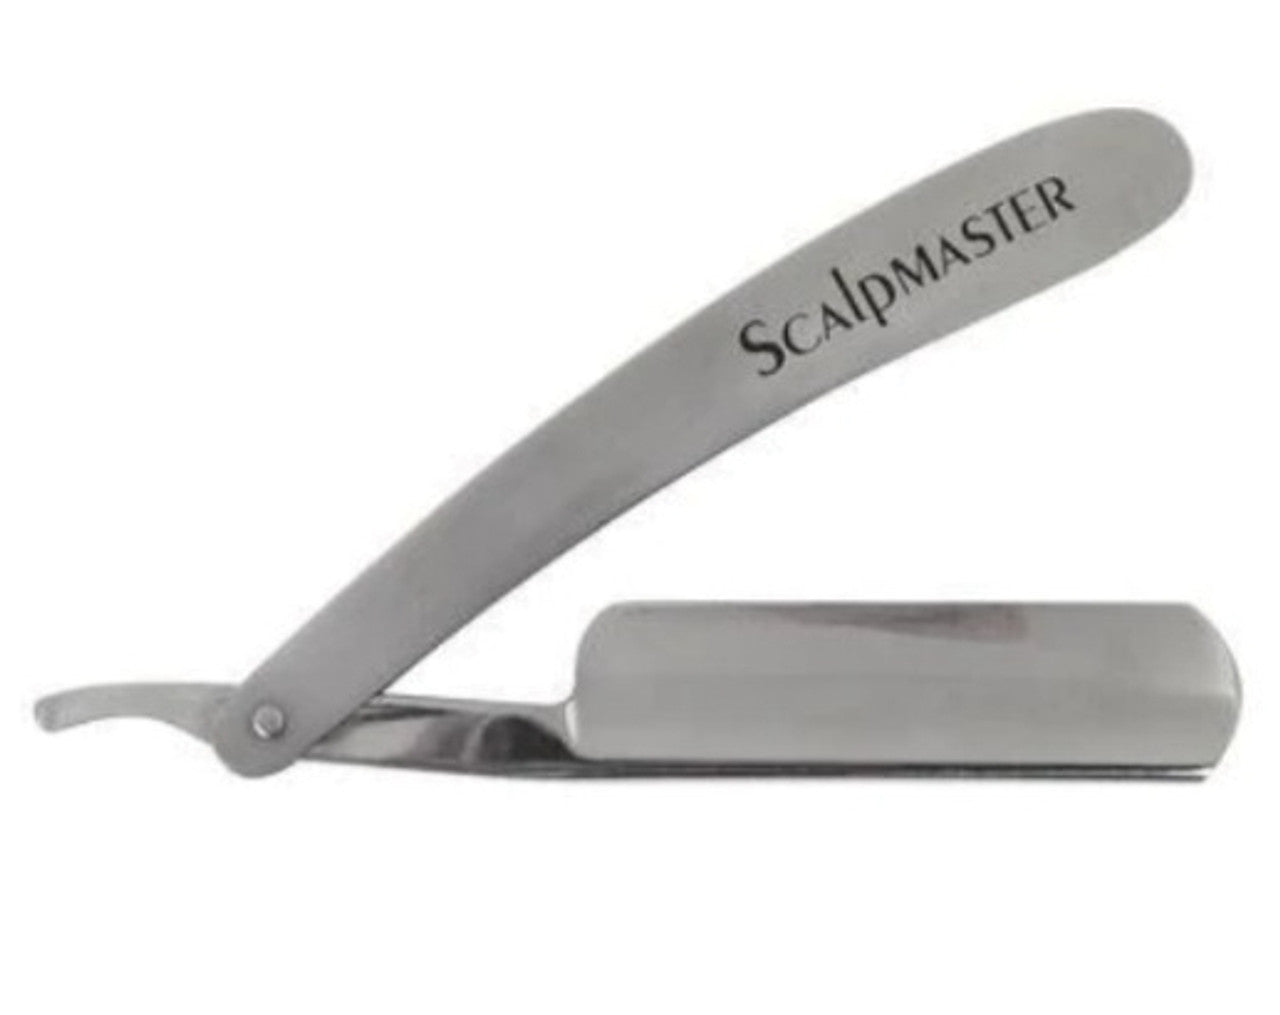 Scalpmaster Professional Stainless Steel Deluxe Shaving Razor - Silver